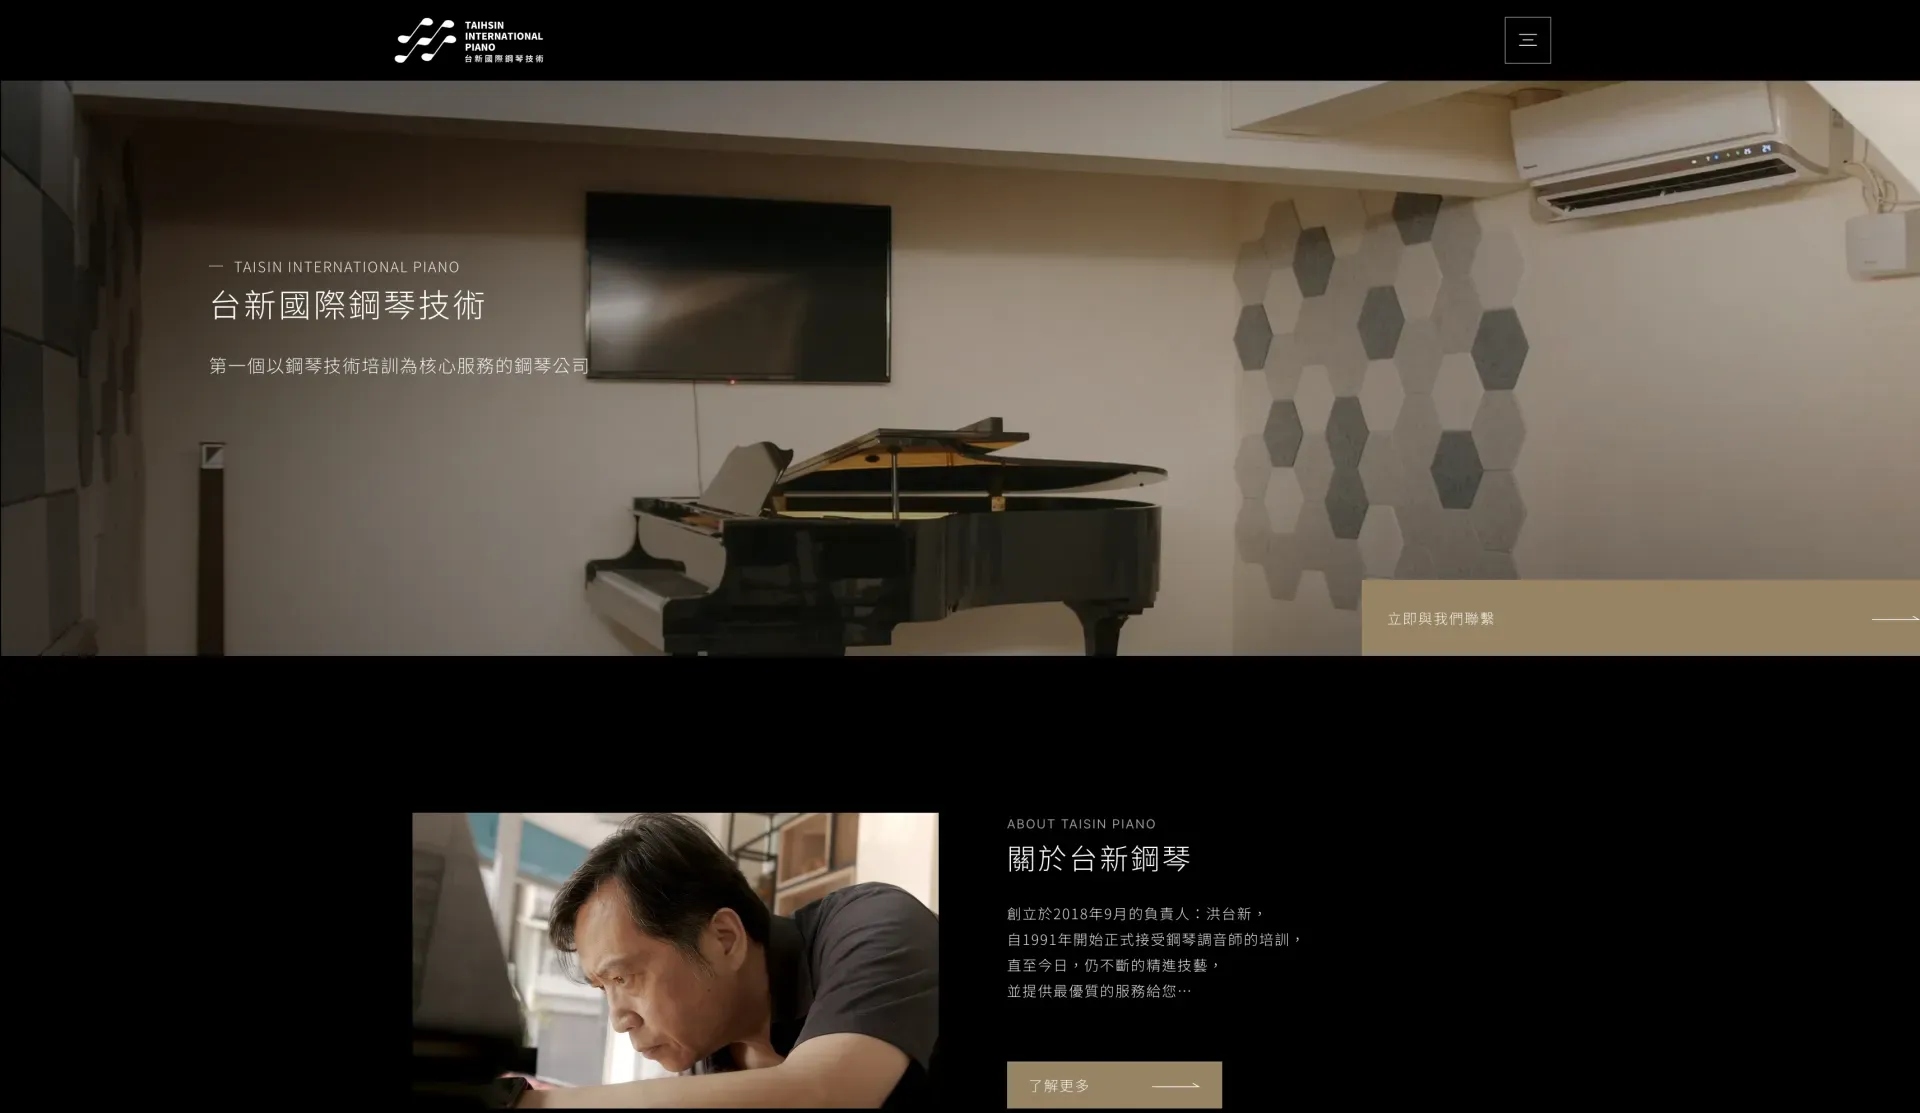 台新國際鋼琴技術 Taisin International Piano